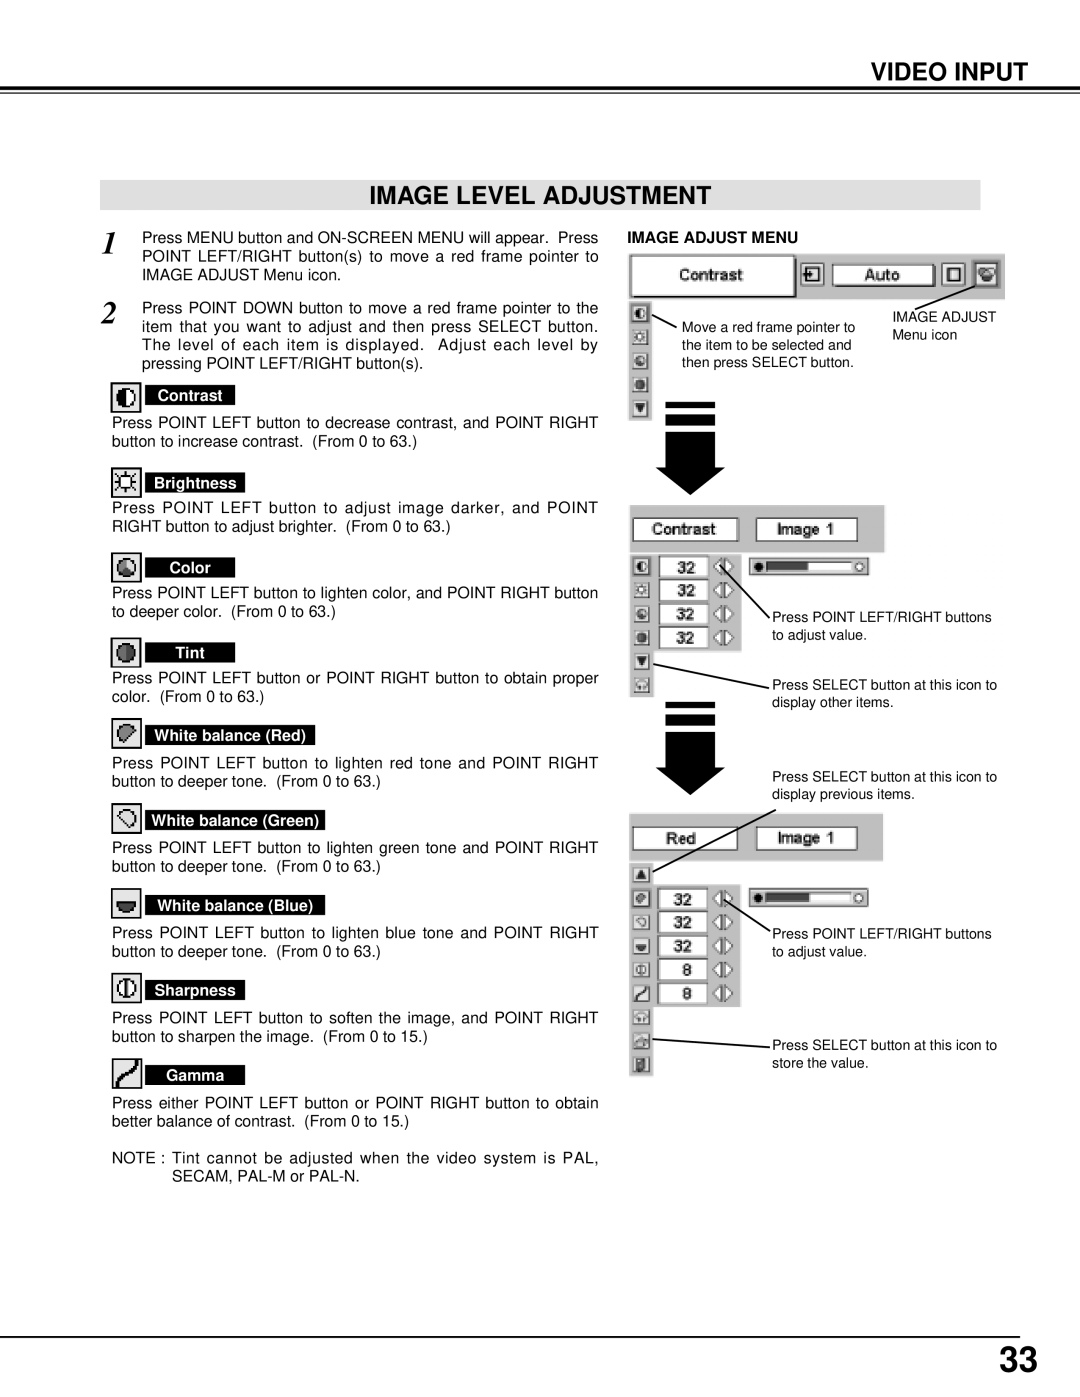 Eiki LC-SM3 owner manual Video Input Image Level Adjustment, Contrast 